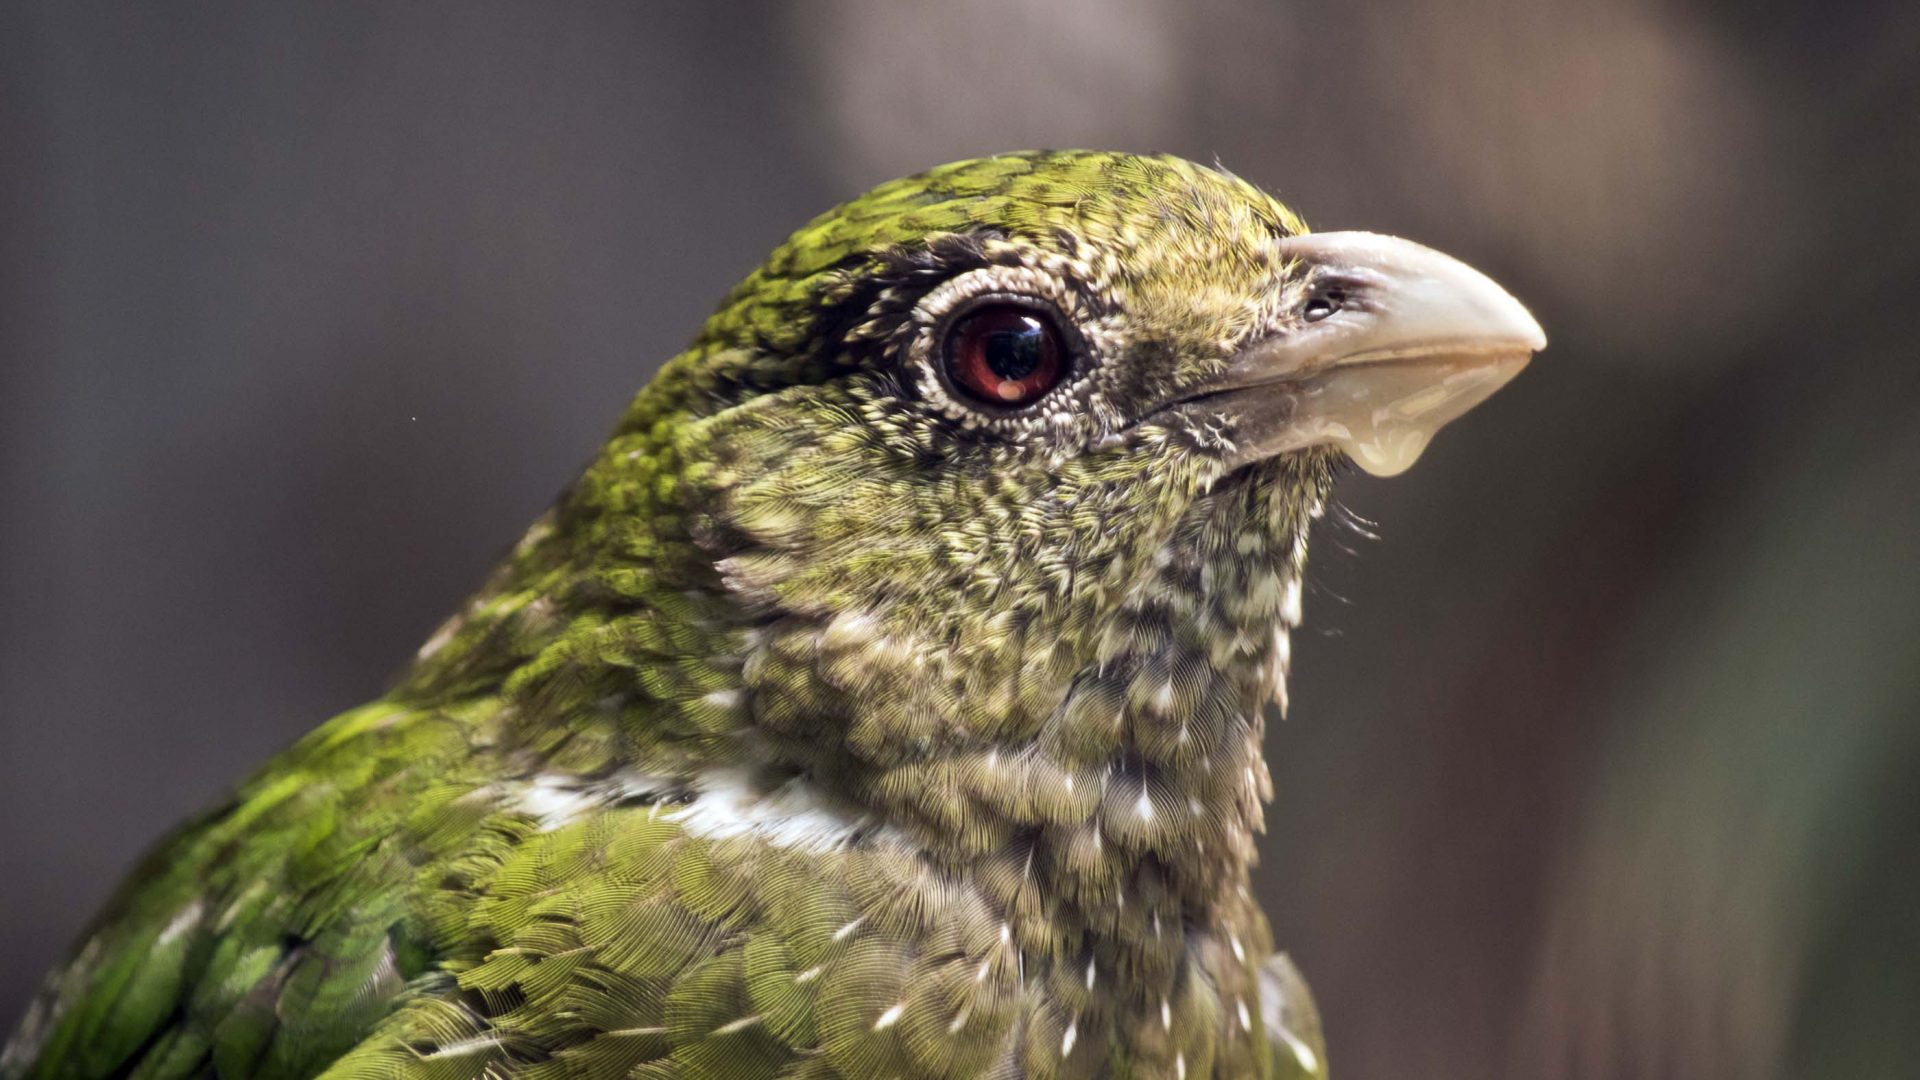 A brown and green bird up close.